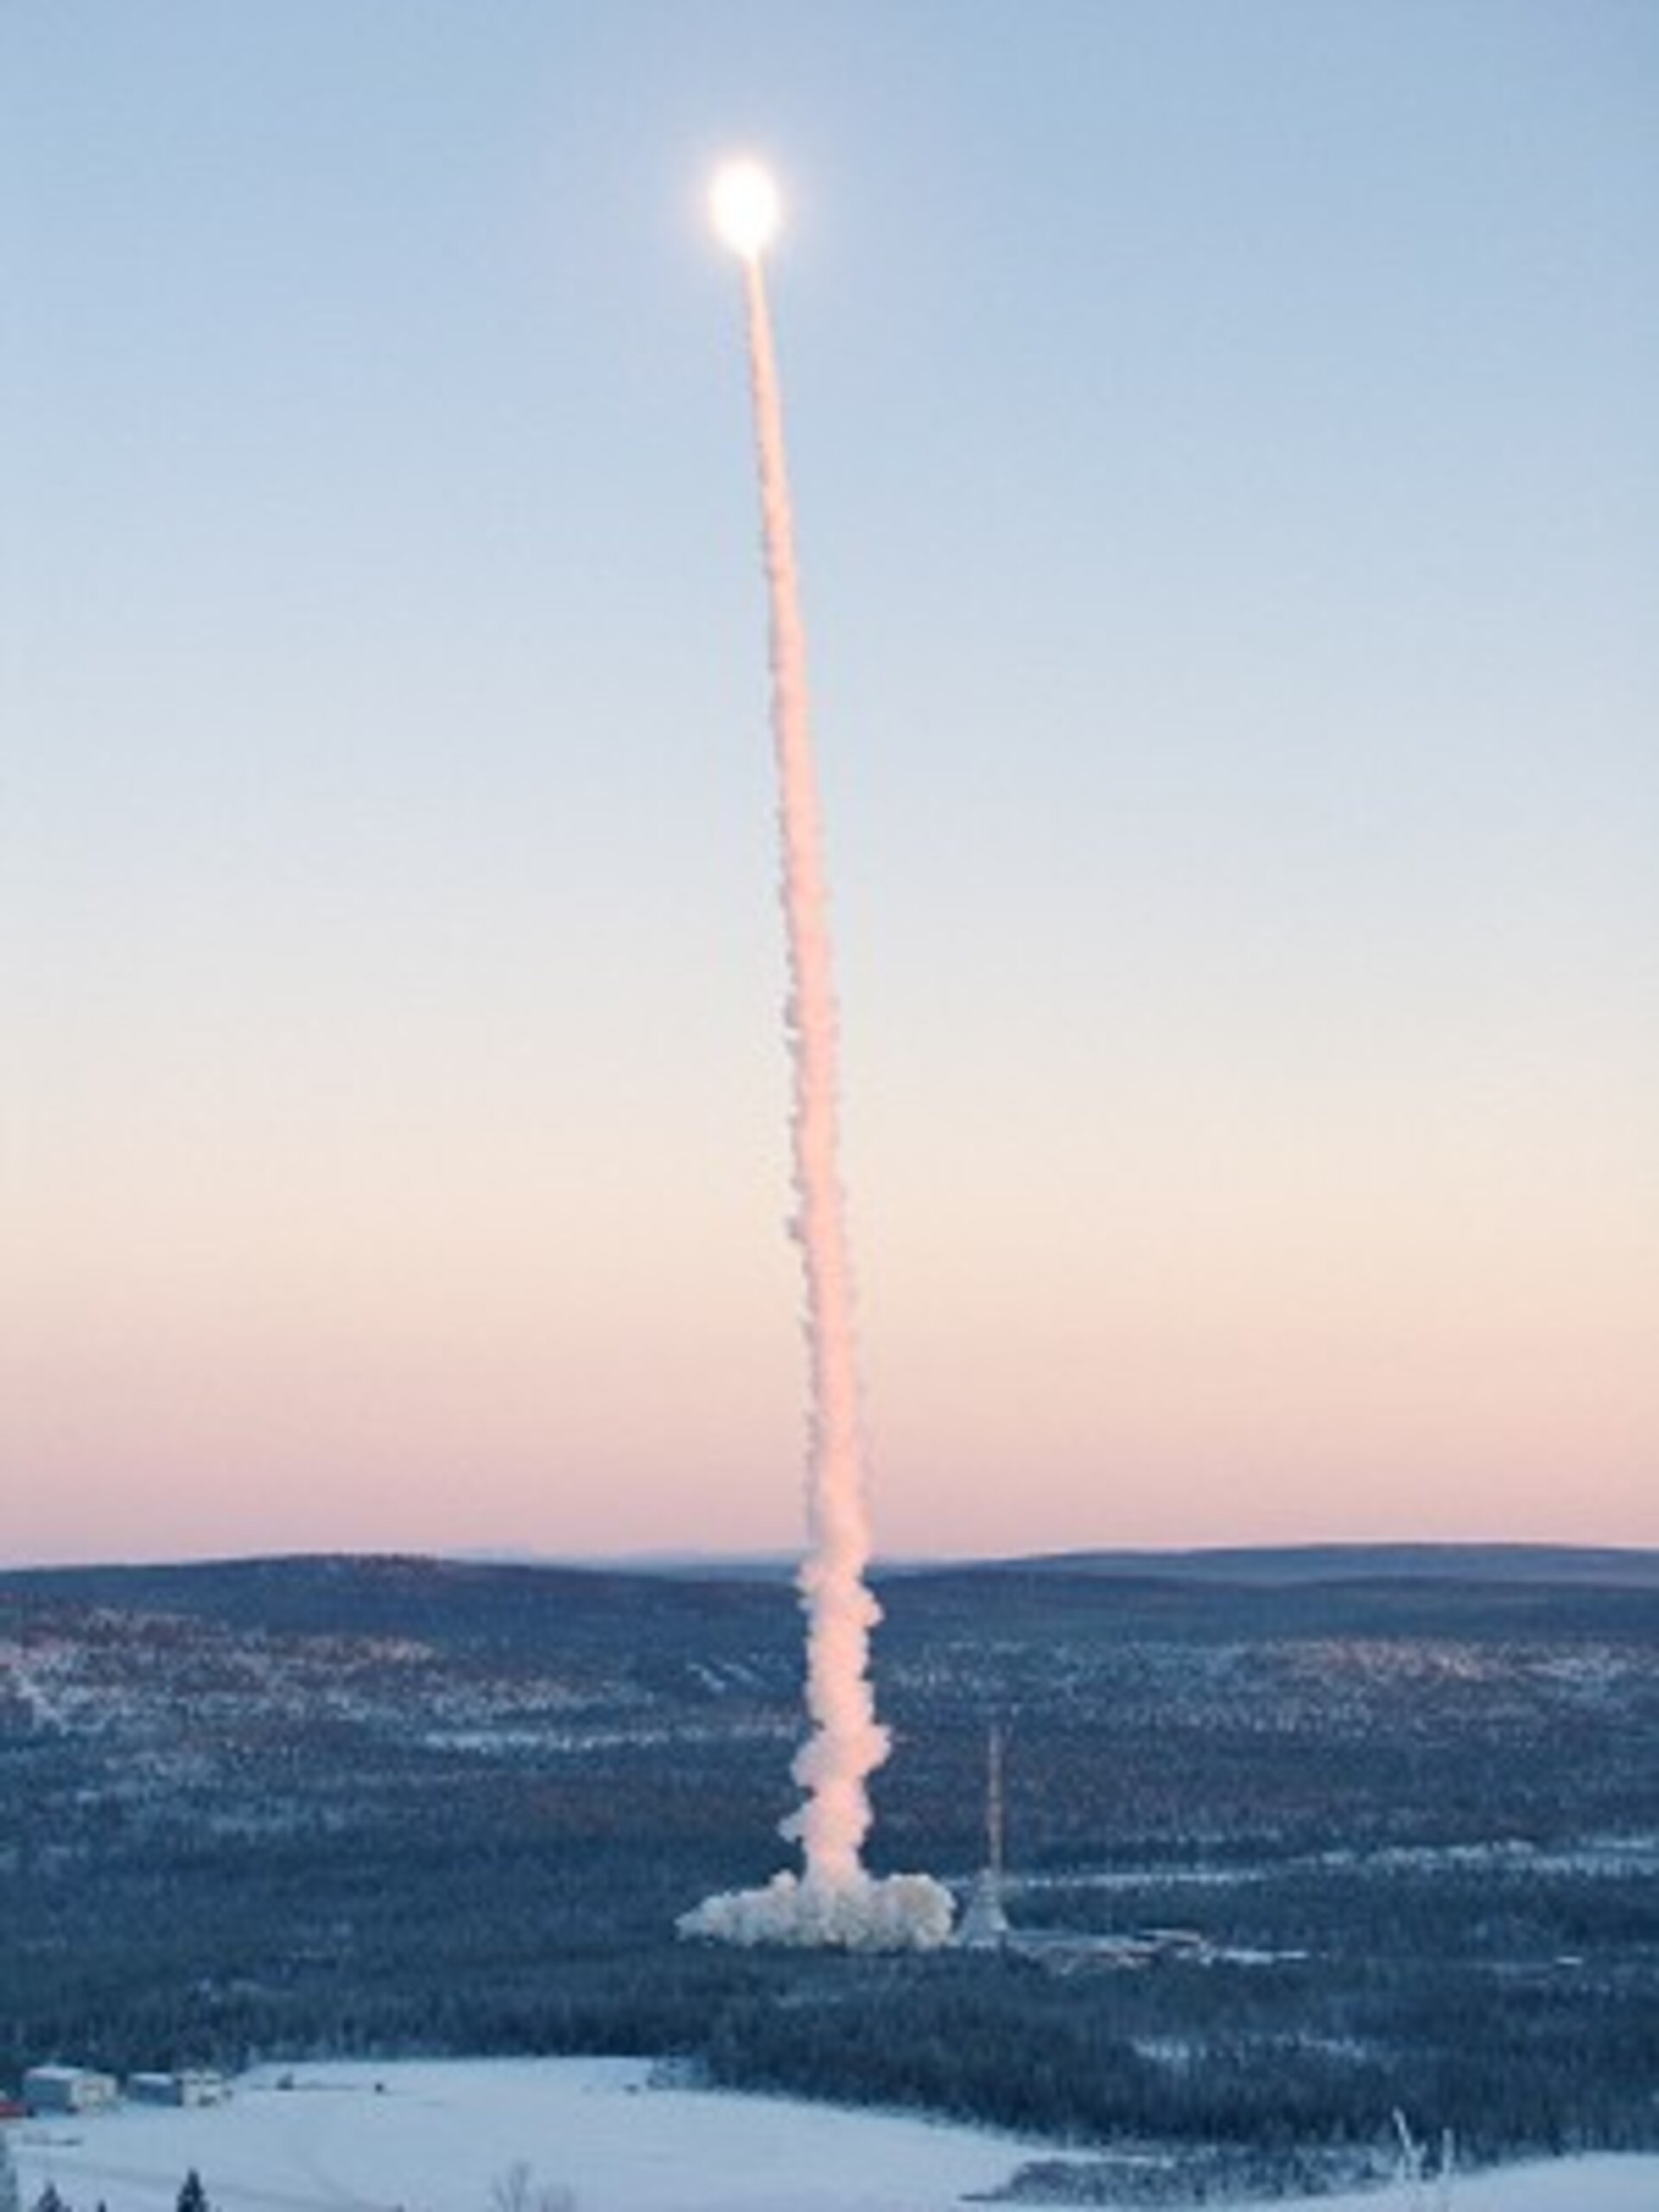 Lift-off for Maxus 6 sounding rocket at 09:35 CET, Monday 22 November 2004